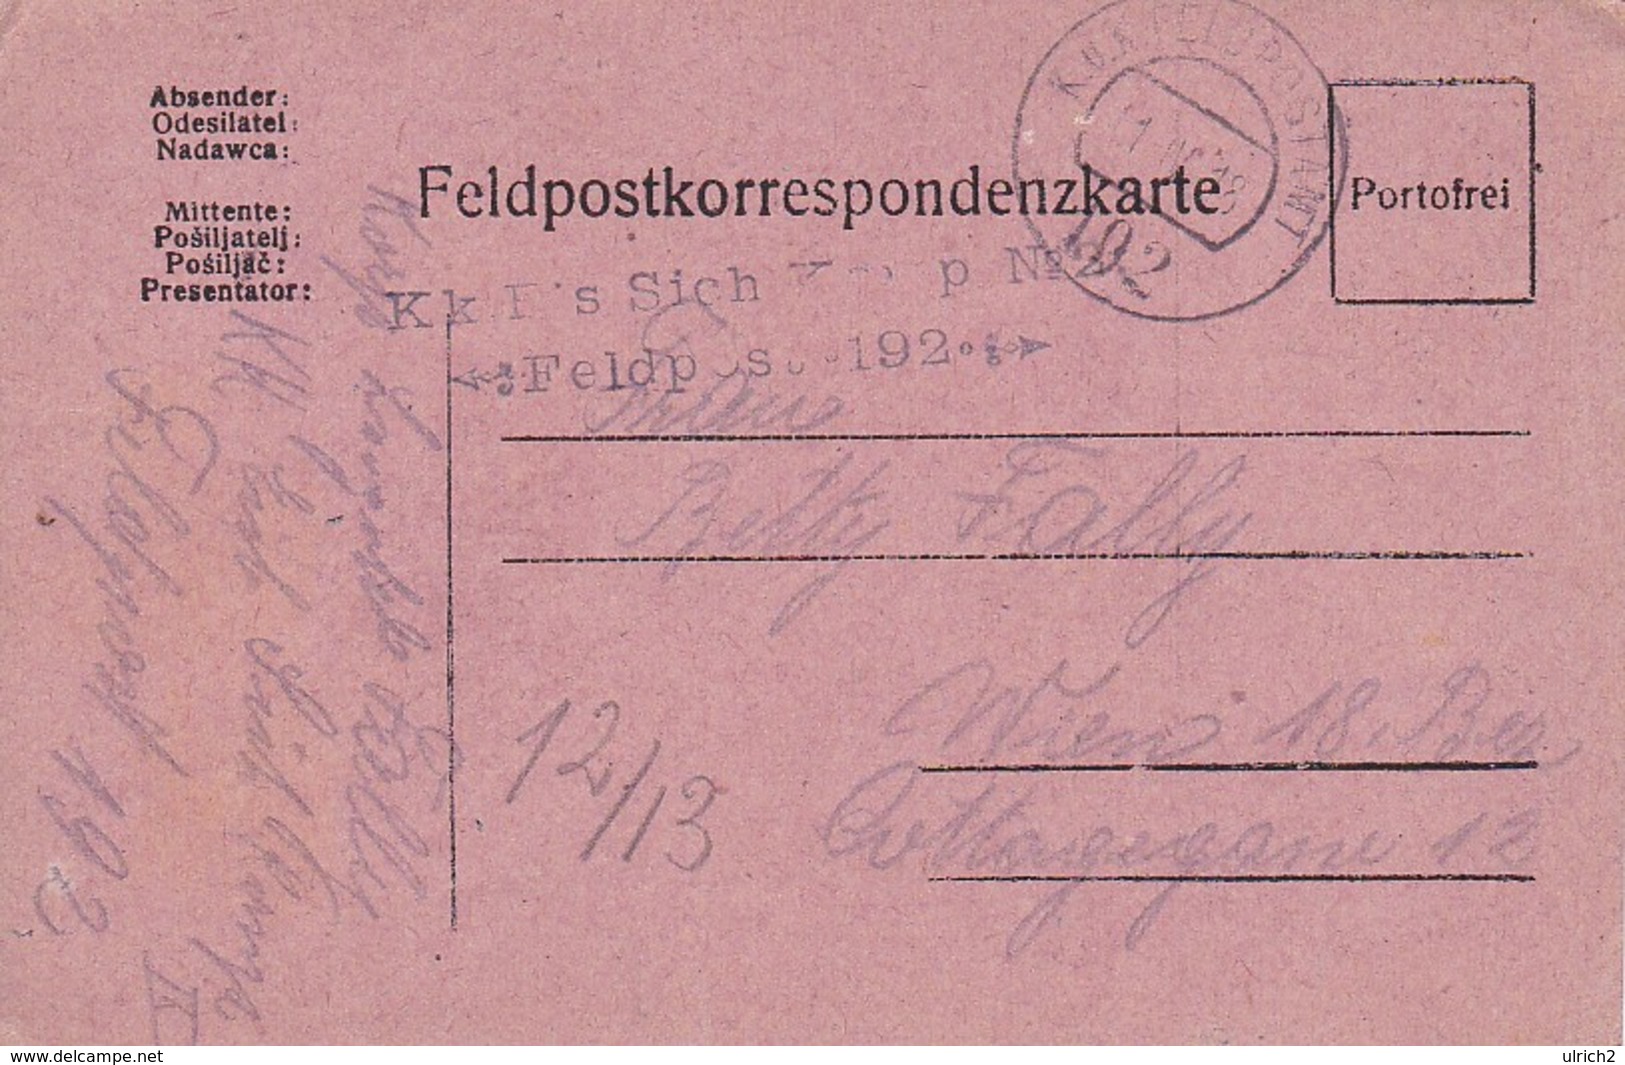 Feldpostkarte - K.k. Eis. Sich Komp. No. 2 - Feldpost 192 -  Nach Wien - 1918 (38578) - Covers & Documents